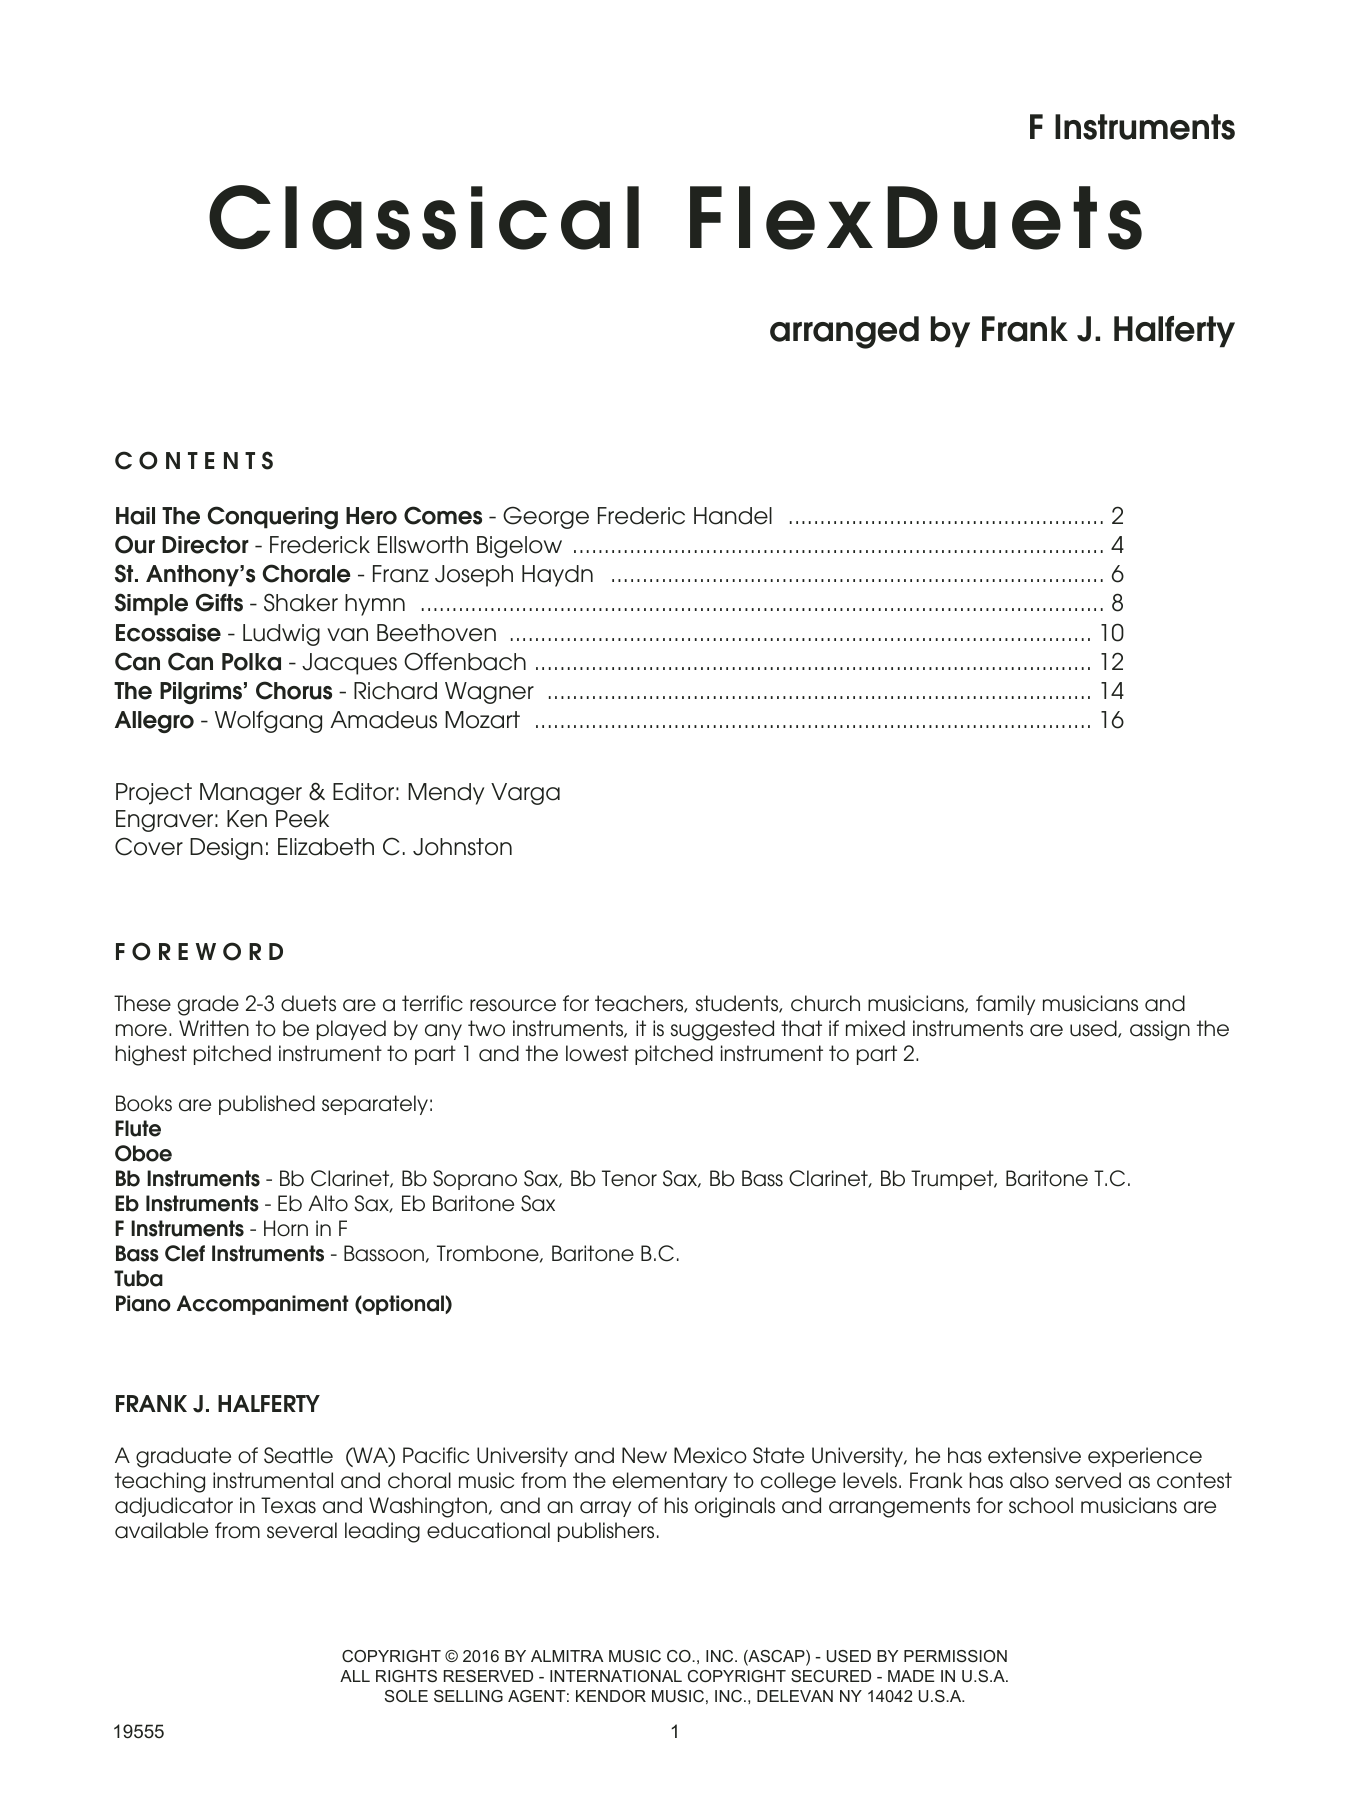 Download Frank J. Halferty Classical FlexDuets - F Instruments Sheet Music